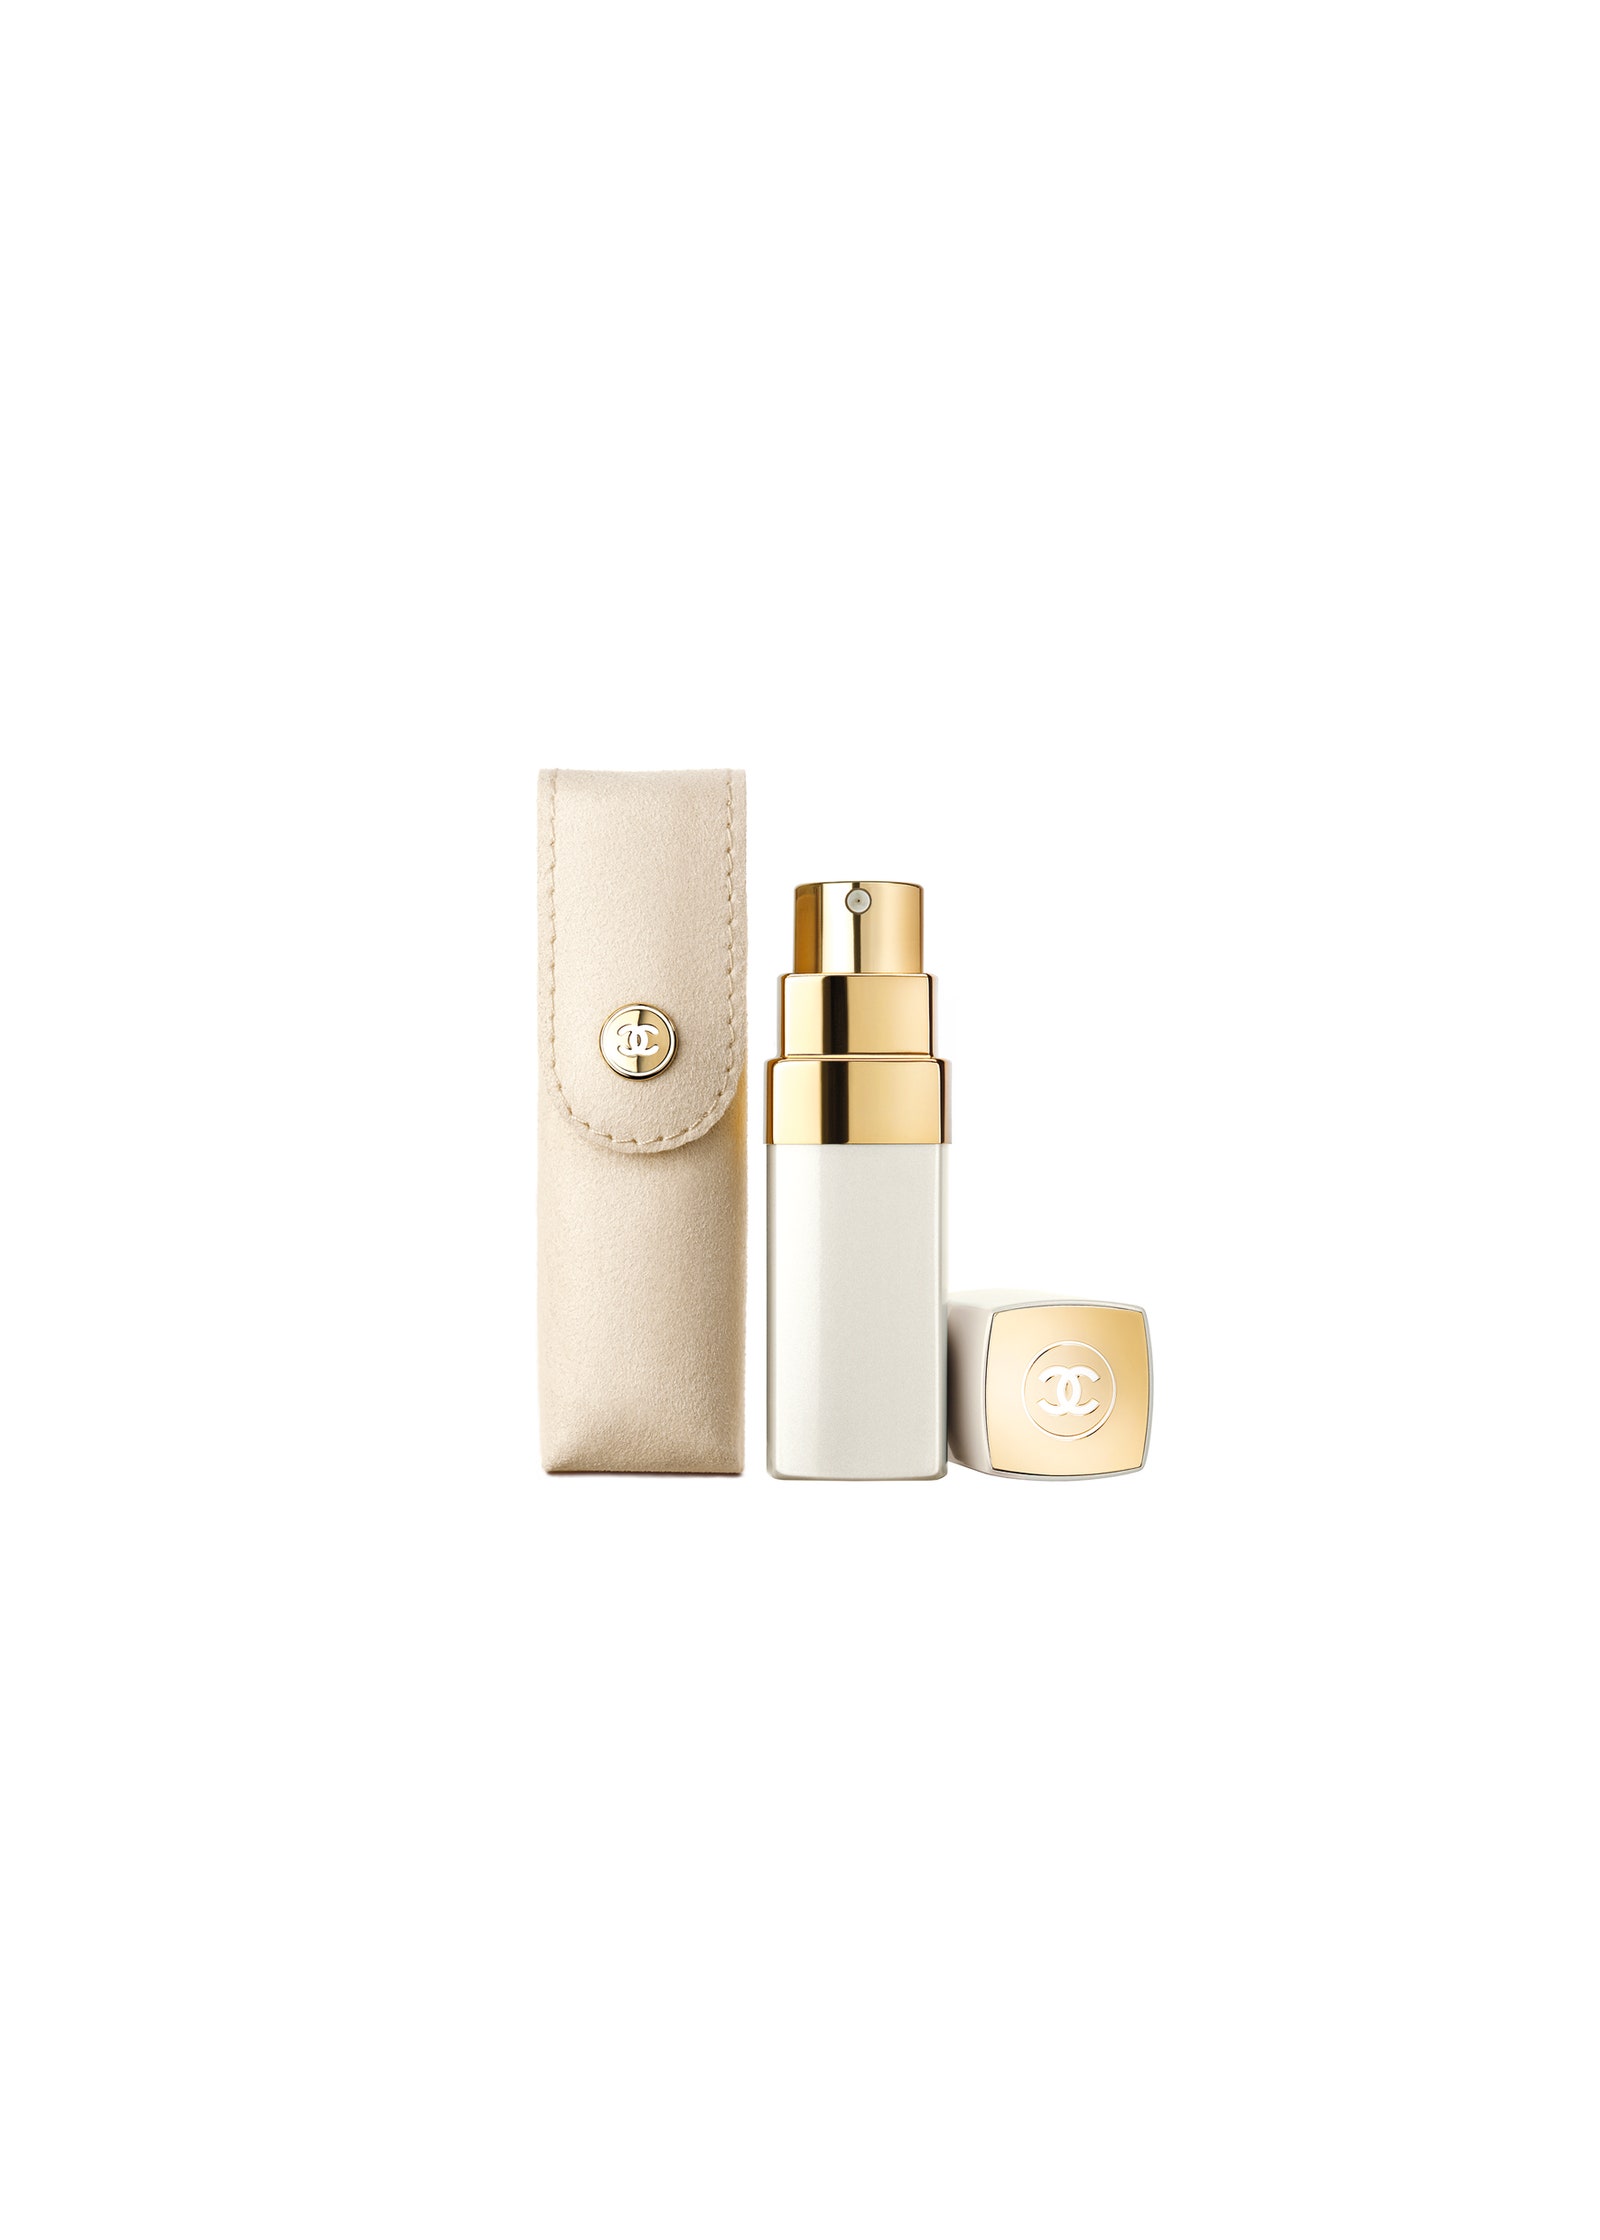 Аромат Coco Mademoiselle Chanel парфюмерный спрей в пополняемом минифлаконе | Glamour